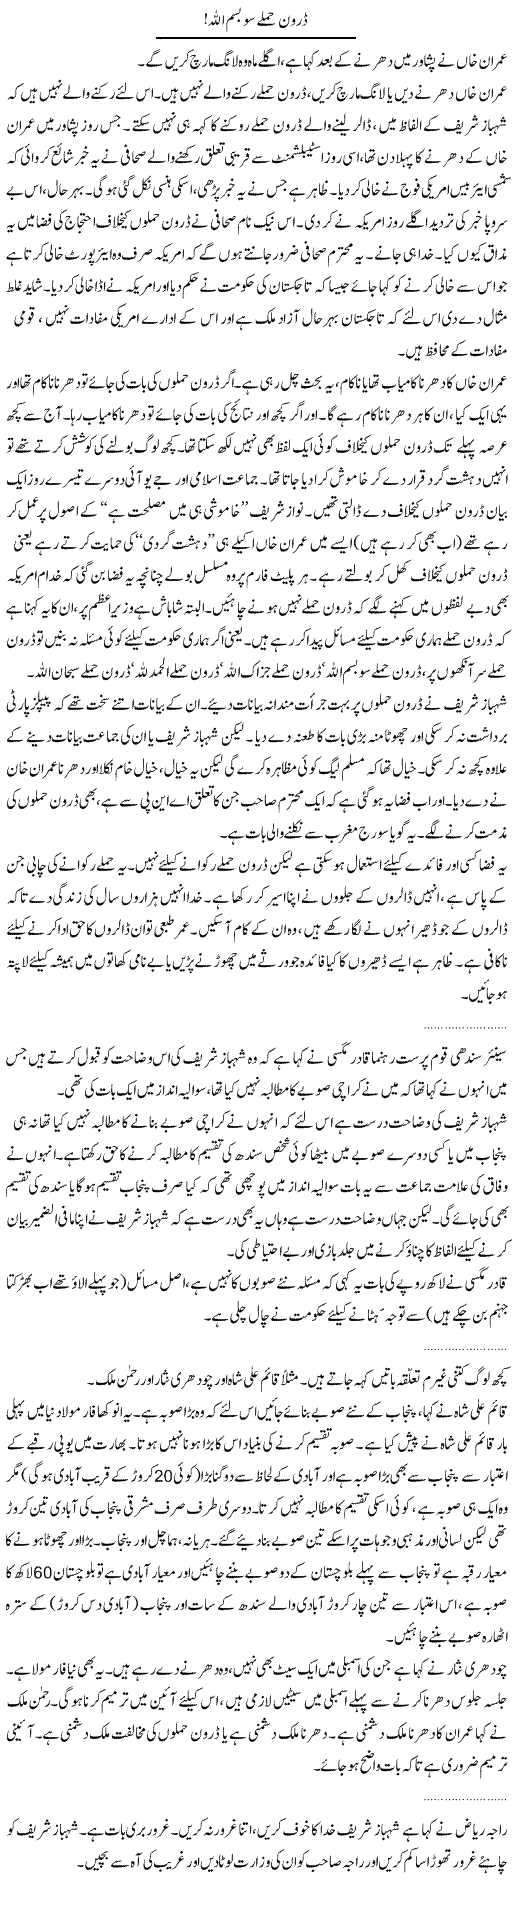 Drone Strikes Express Column Abdullah Tariq 27 April 2011